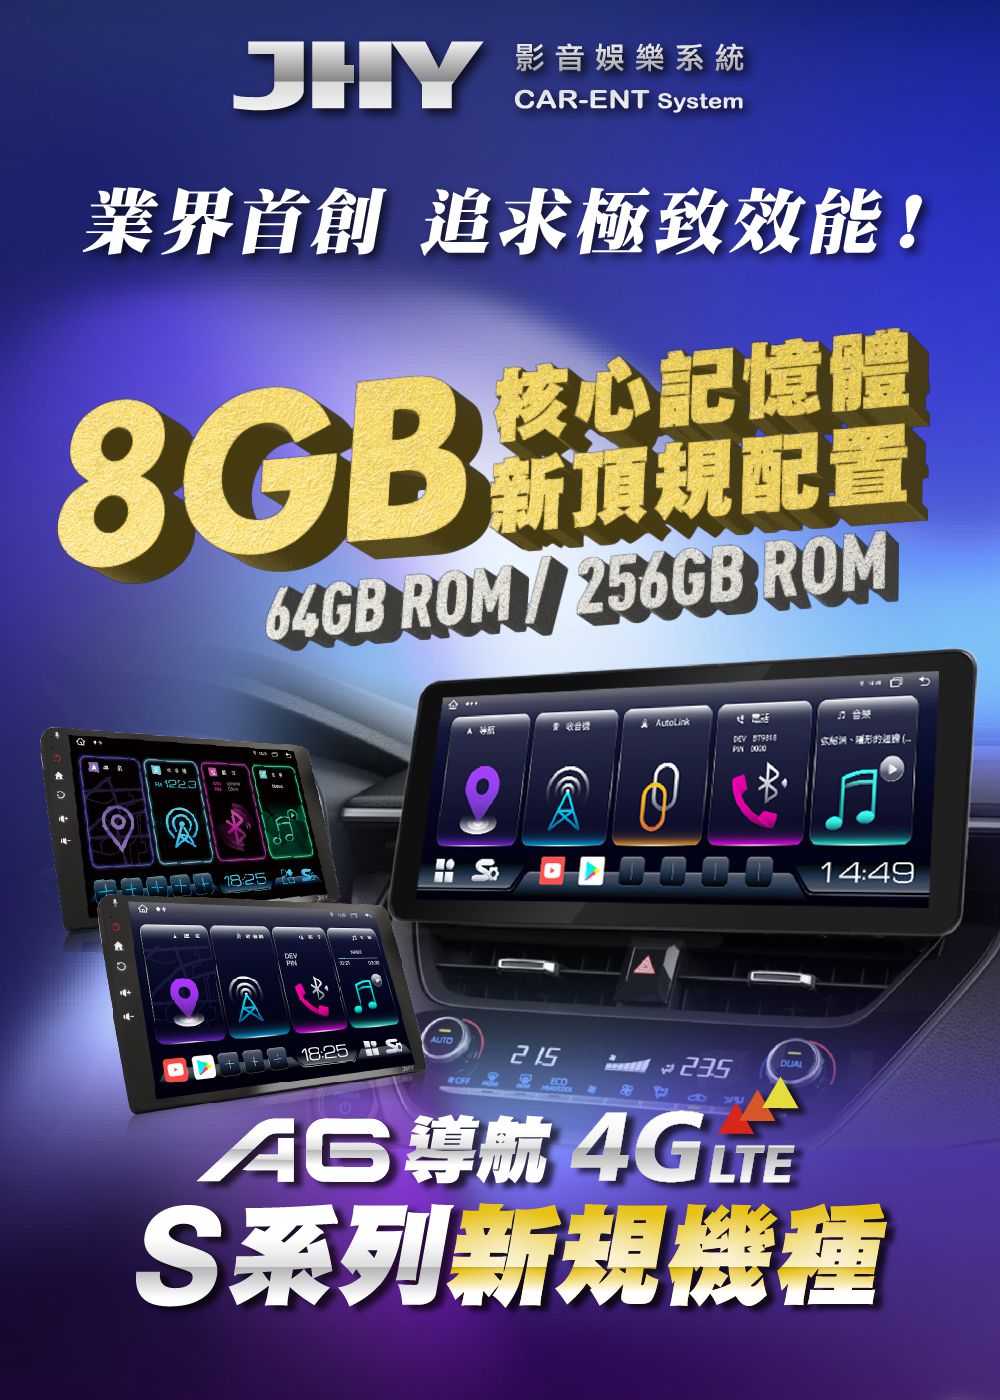 S 4G系列安卓機，獨家專屬A6導航，加碼贈送60天飆網體驗